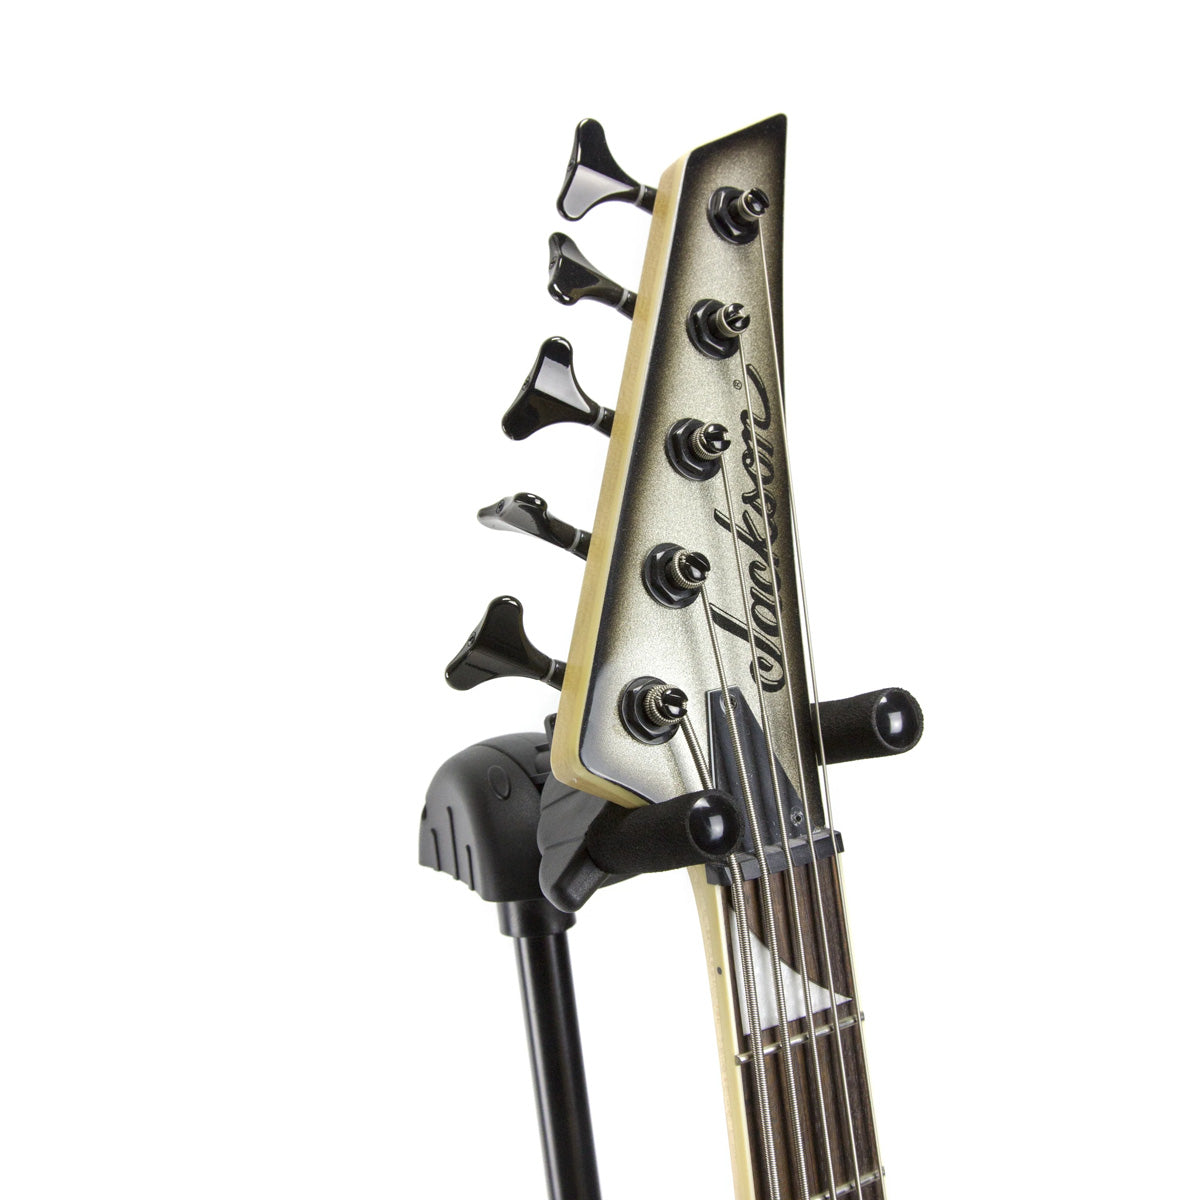 Hercules GS525B 5 Guitar Rack – Easy Music Center